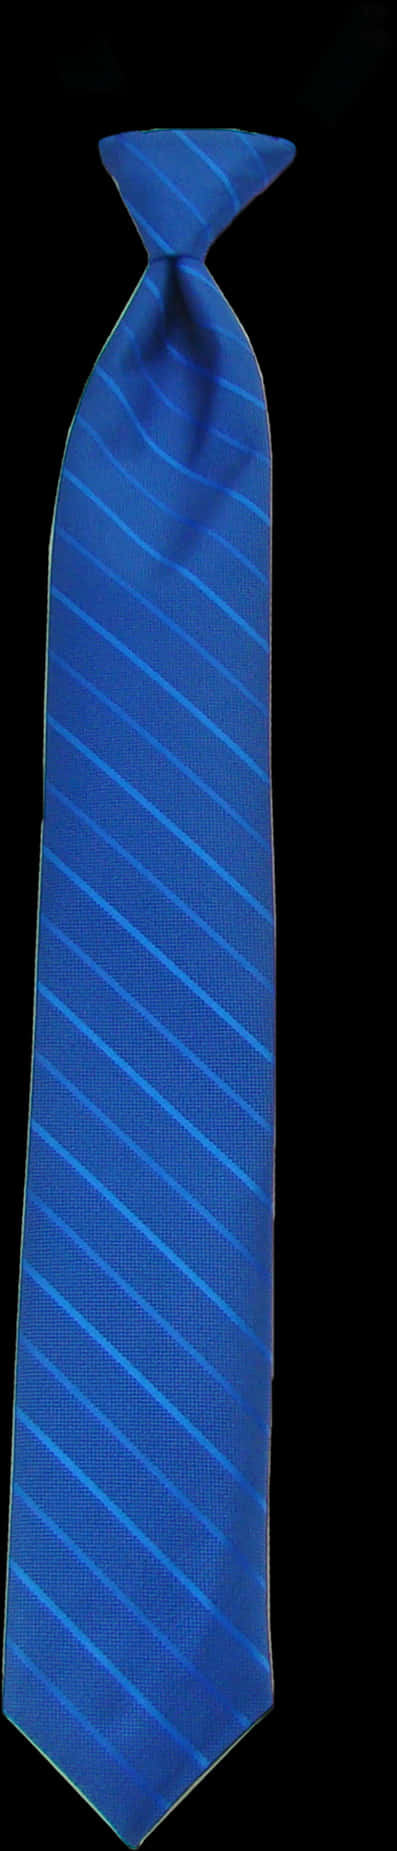 Royal Blue Blue Tie Transparent, Hd Png Download